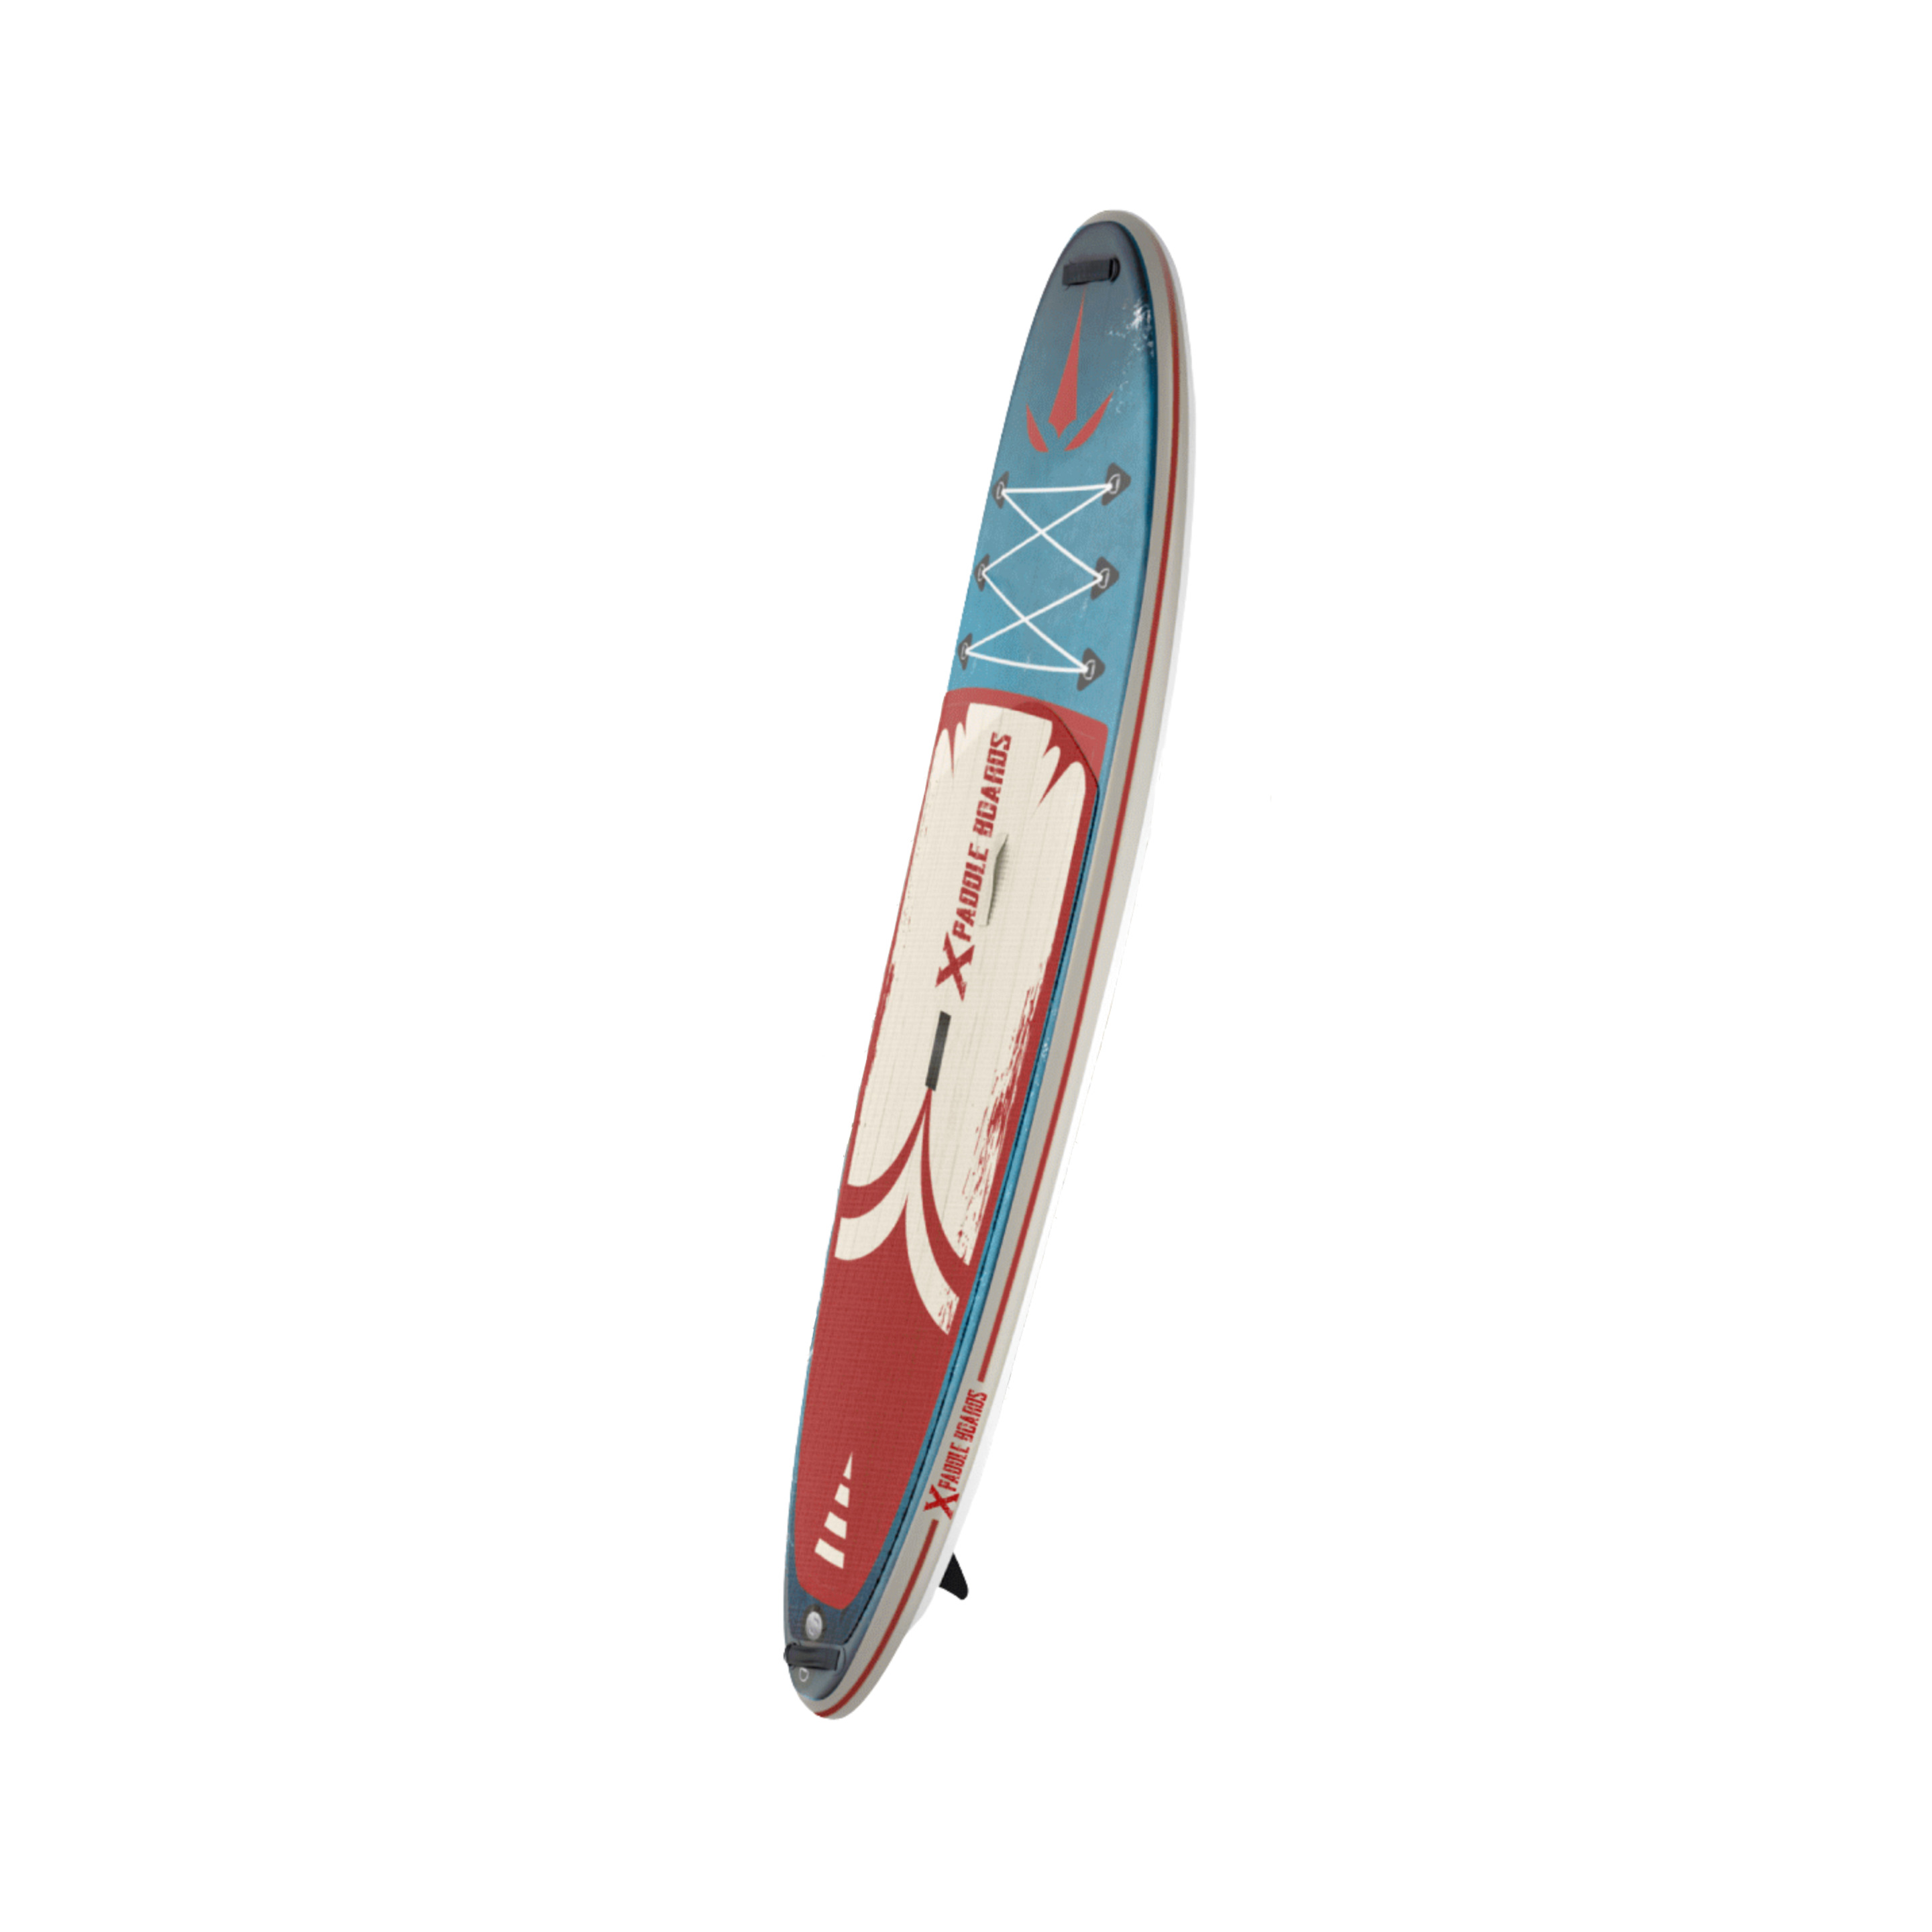 Tabla De Paddle Surf Hinchable  X-shark  320 X 82 X 15 Cm - Azul  MKP